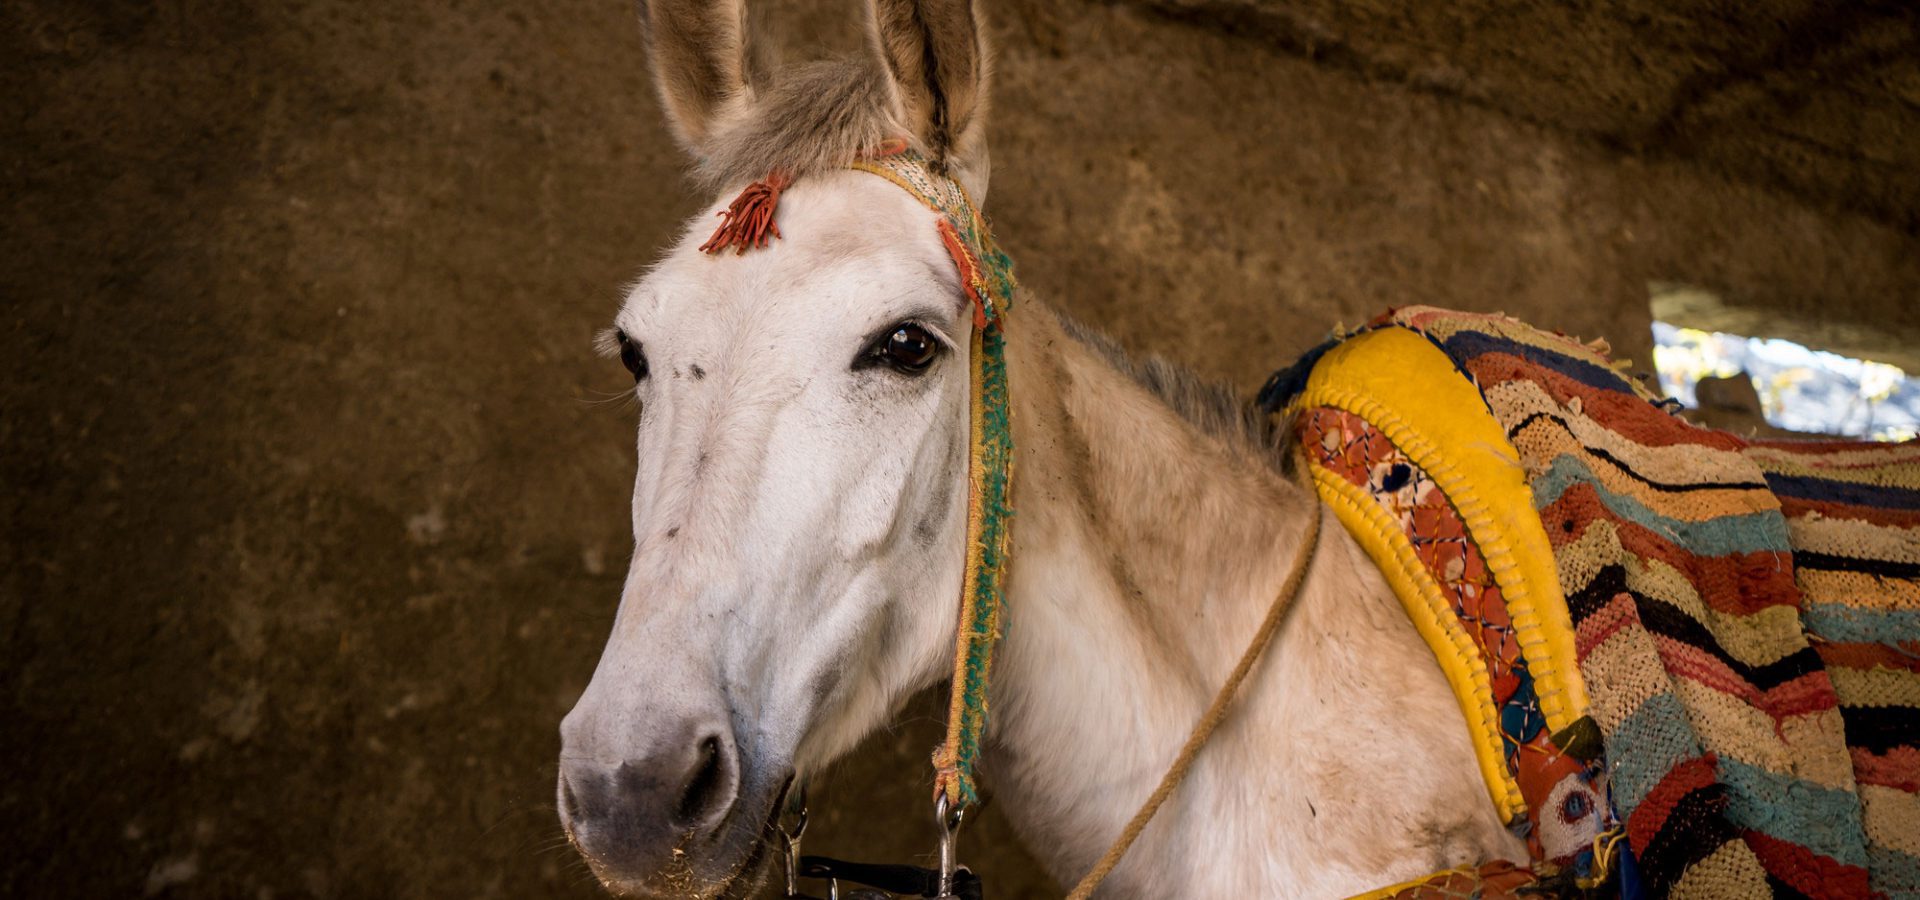 White Morocco horse